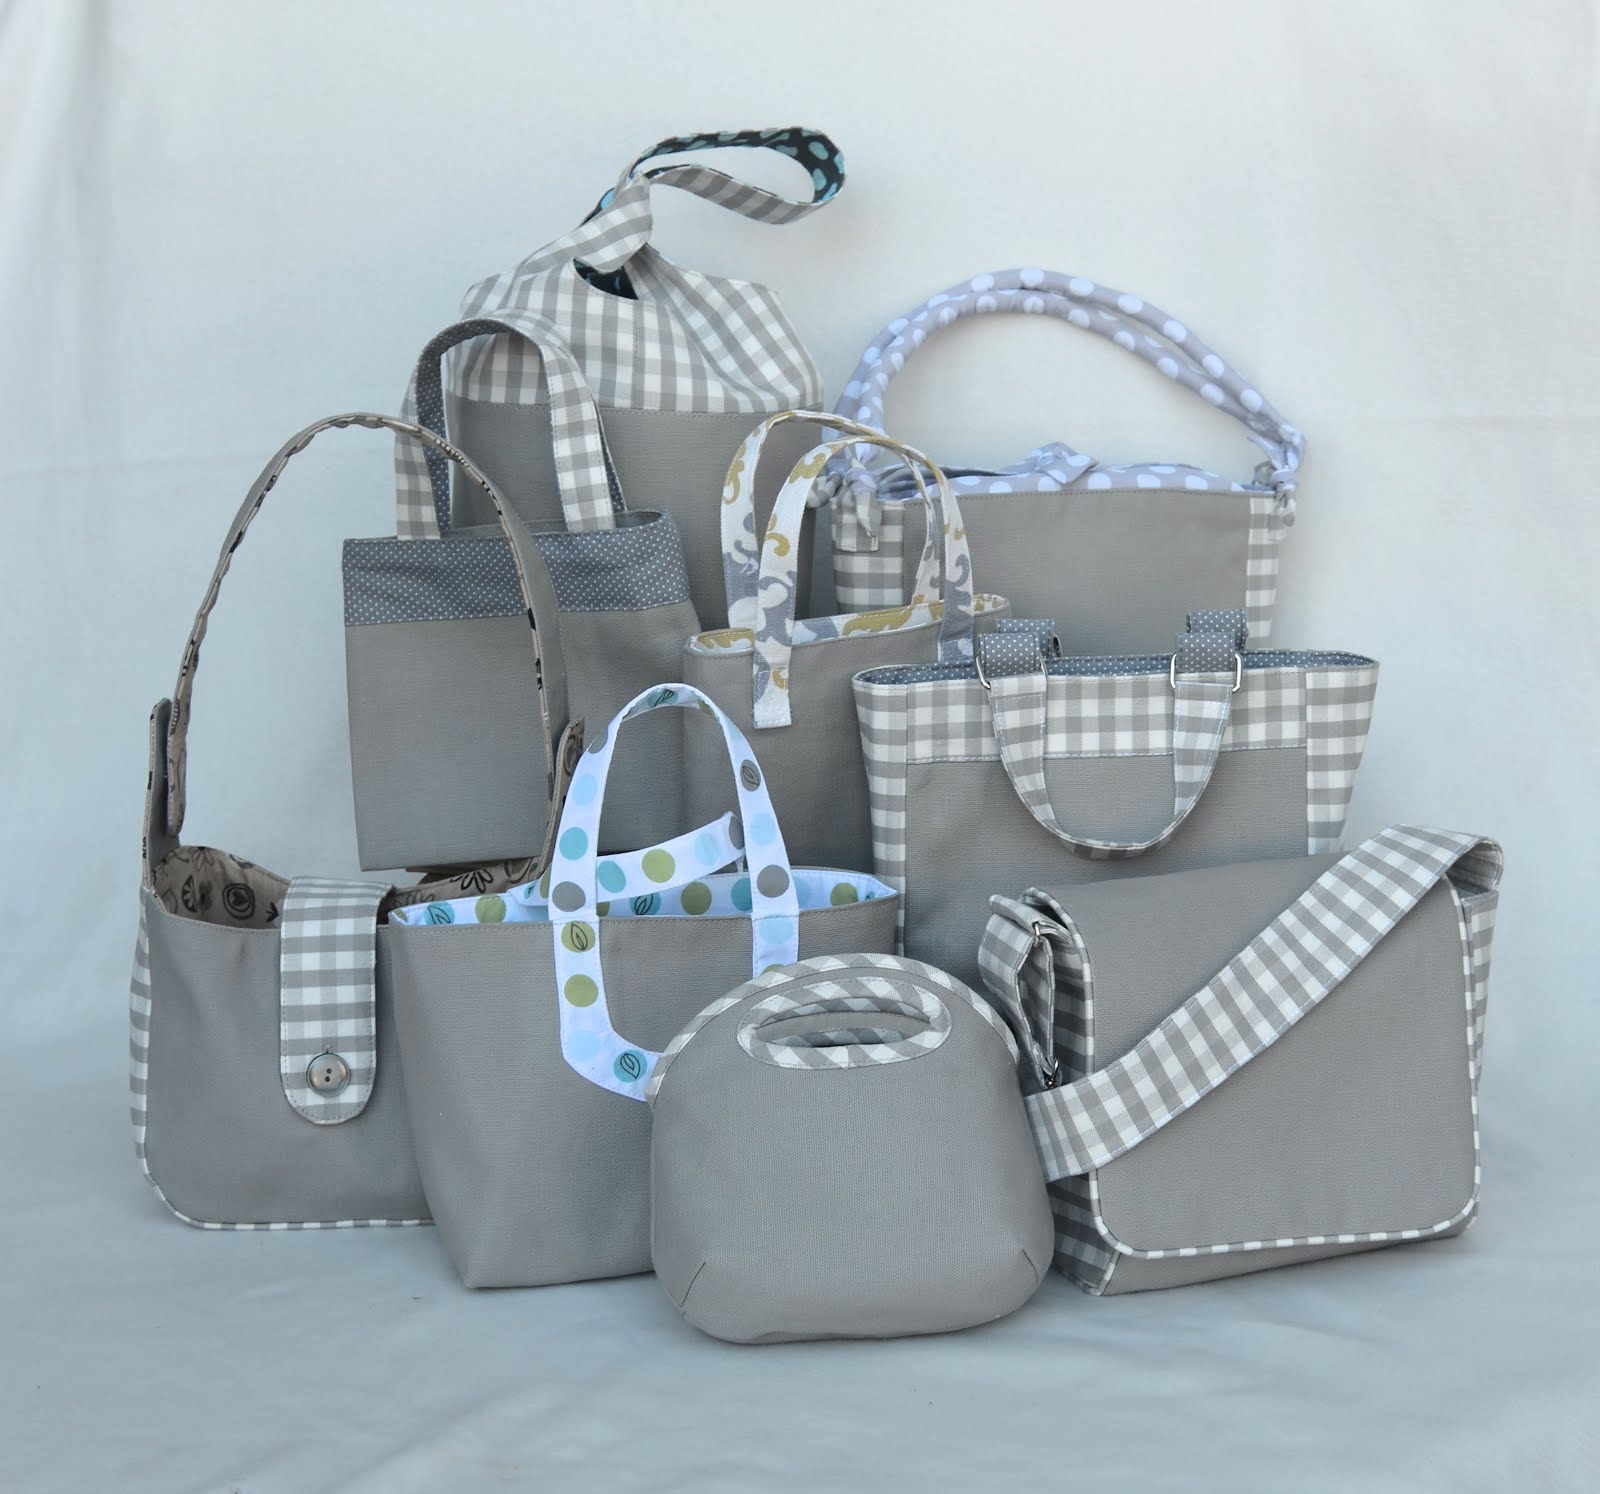 Bolso CH diferentes colores  Purses and handbags, Bags, Purses